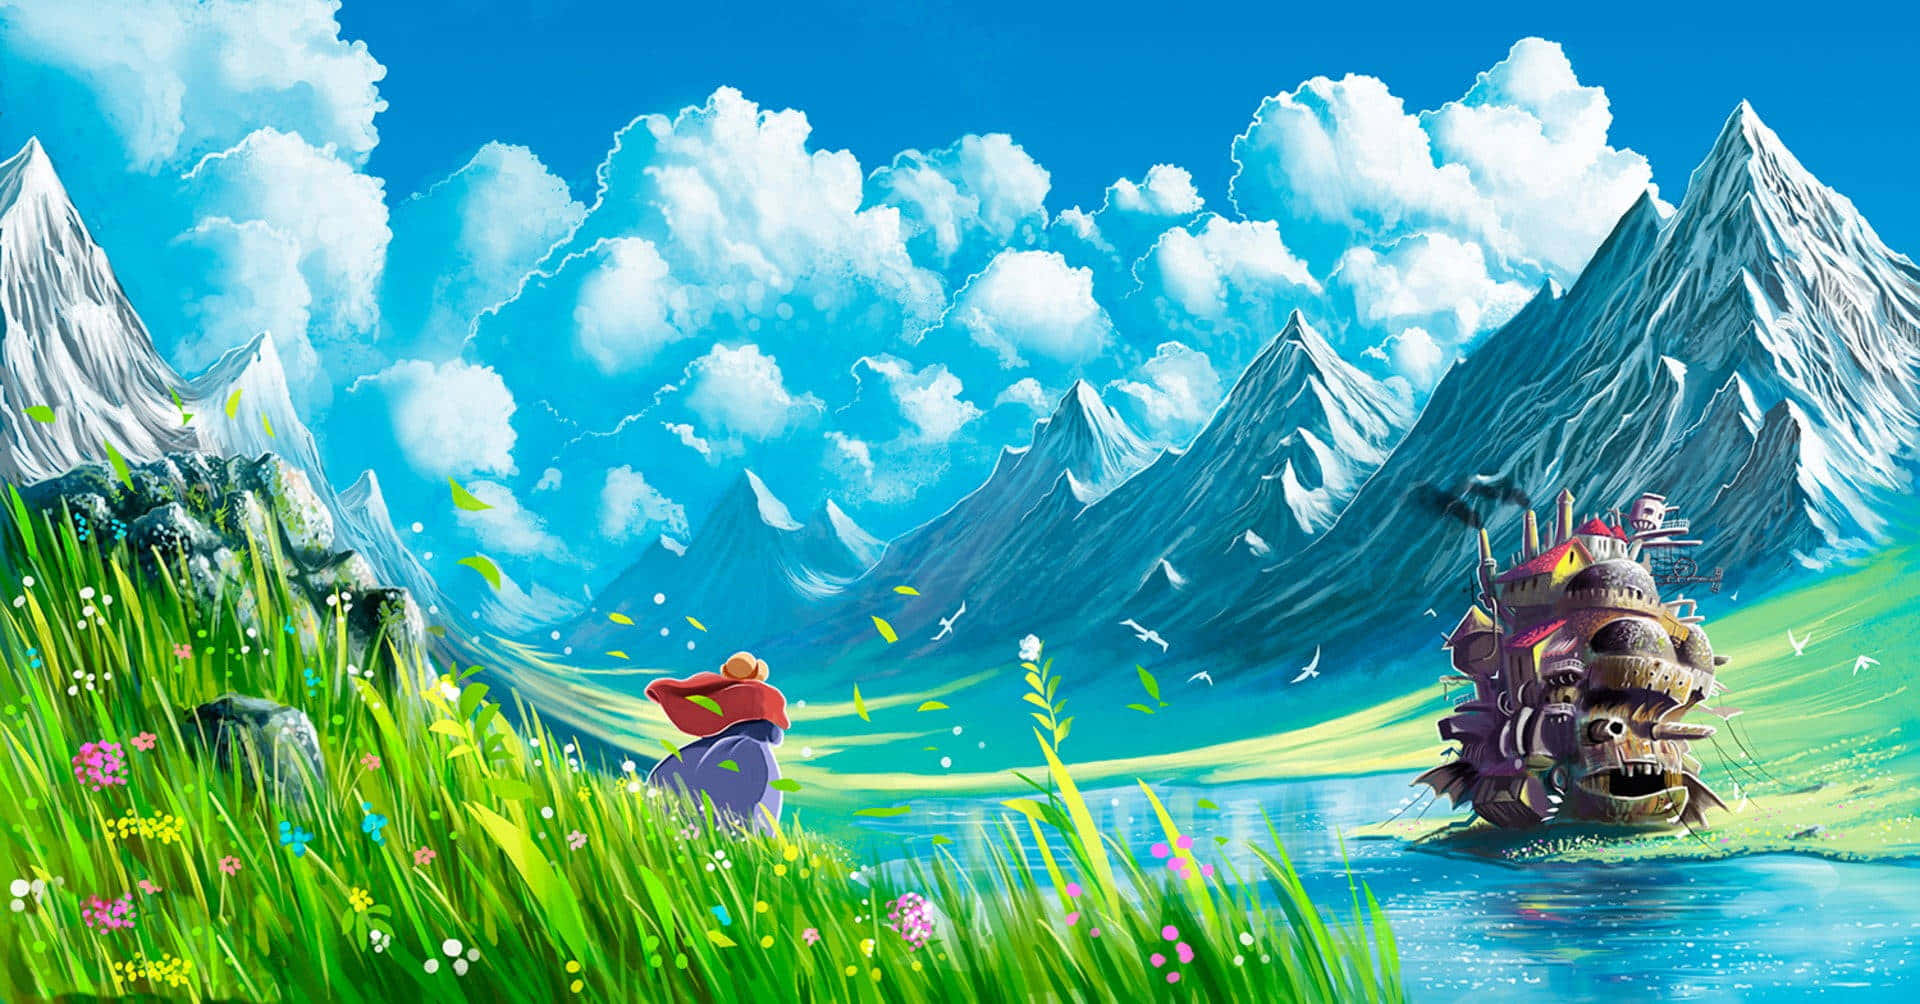 Ghibli Inspired Mountainous Landscape Wallpaper